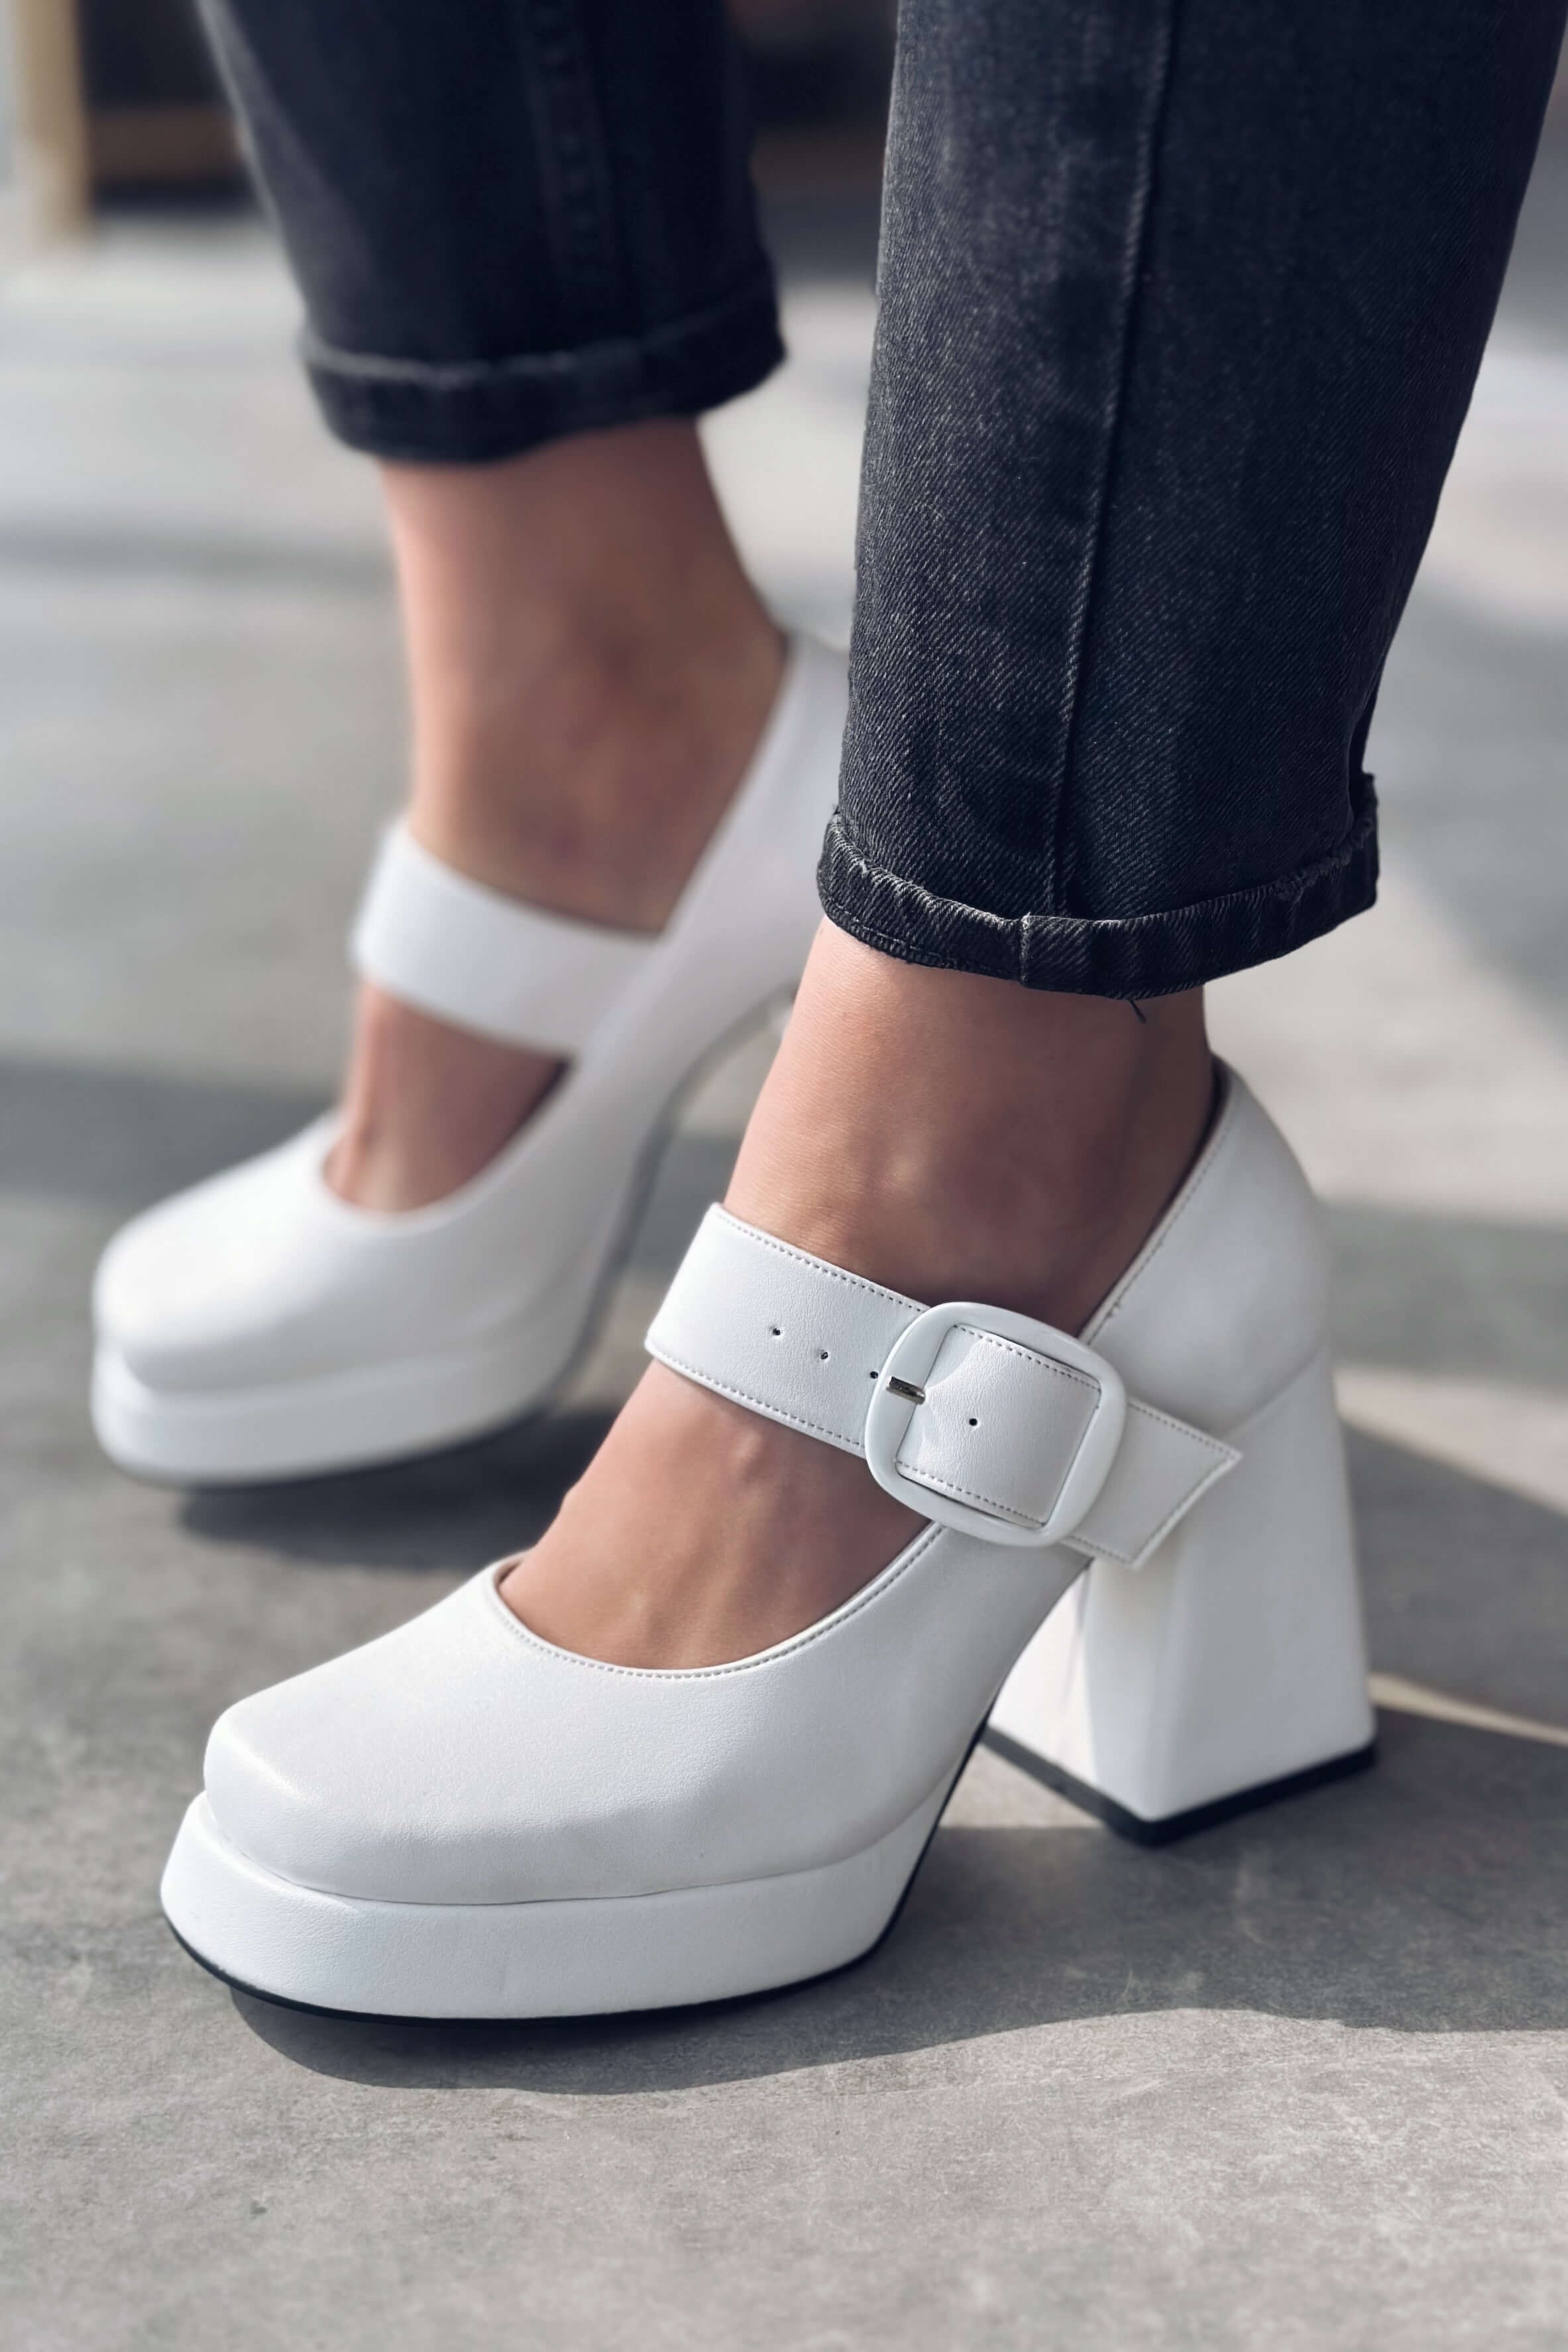 Alpons Matte Leather Women's Platform Heel Shoes White